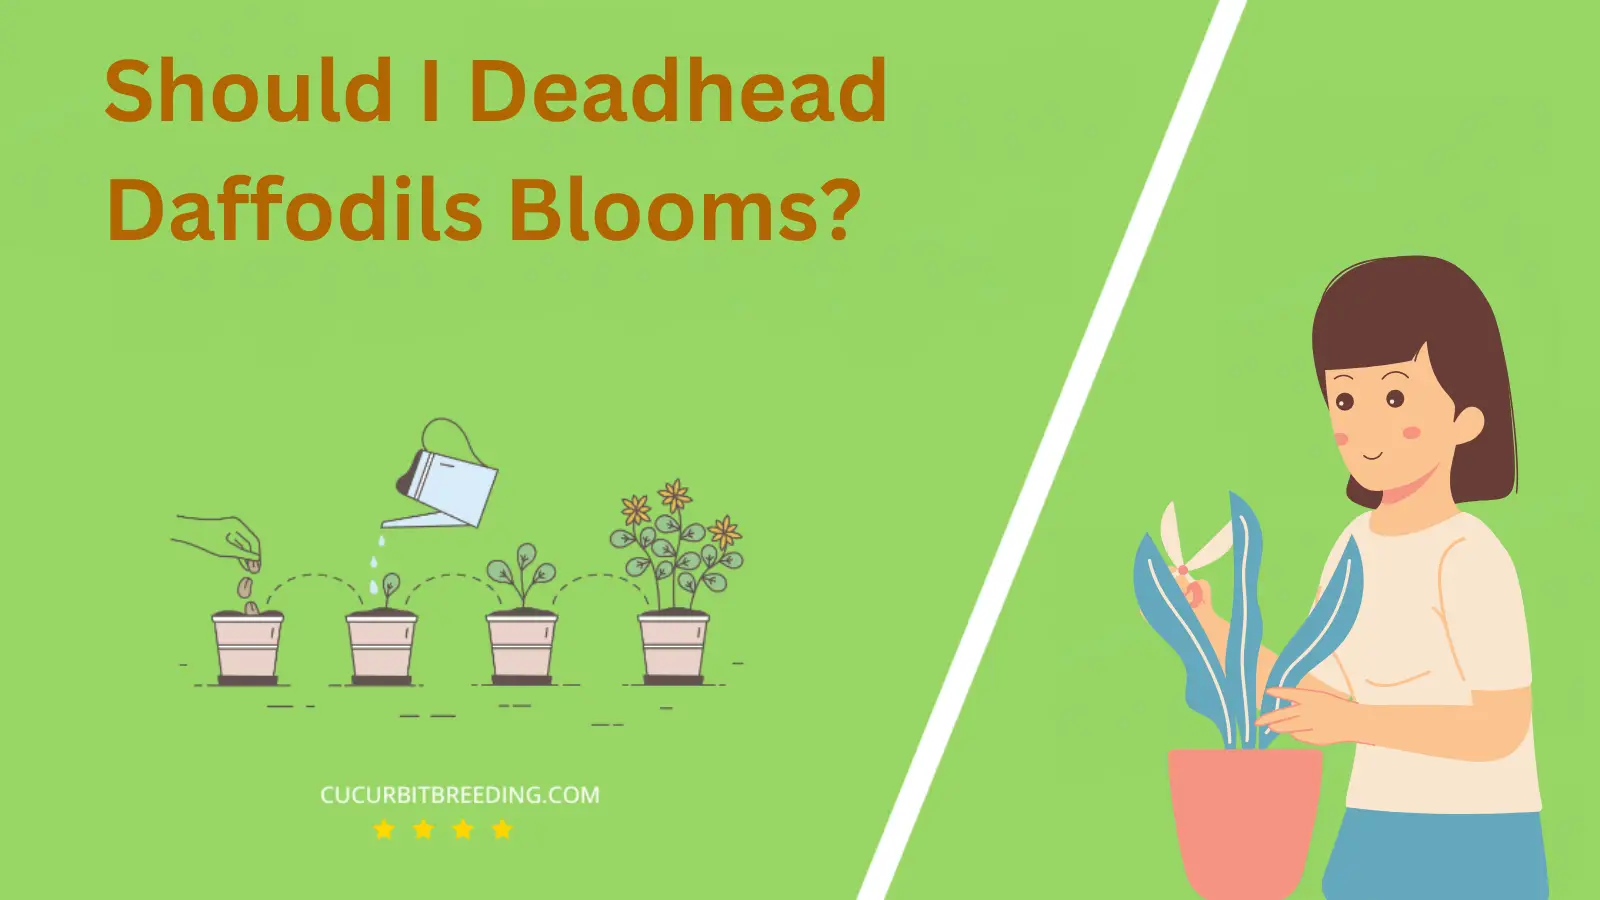 Should I Deadhead Daffodils Blooms?